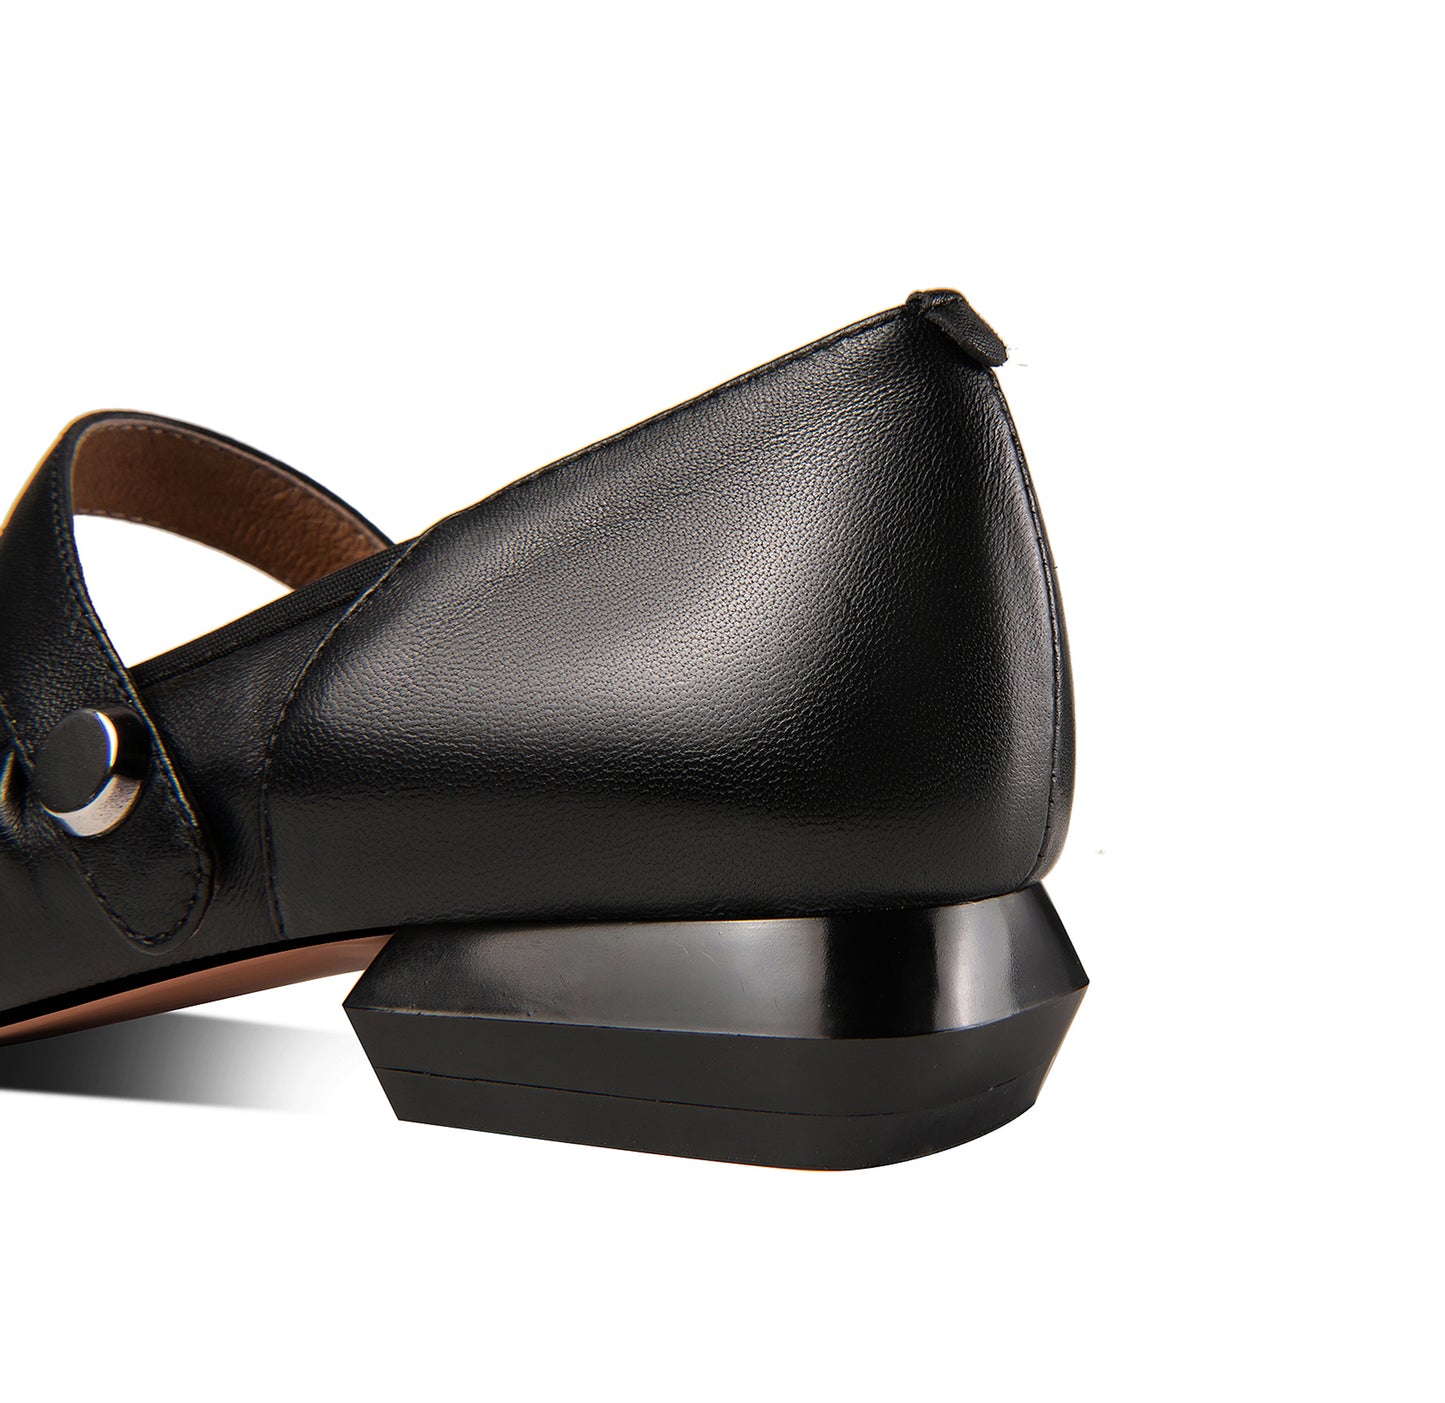 TinaCus Women's Handmade Genuine Leather Flat Heel Cute Mary Jane Shoes